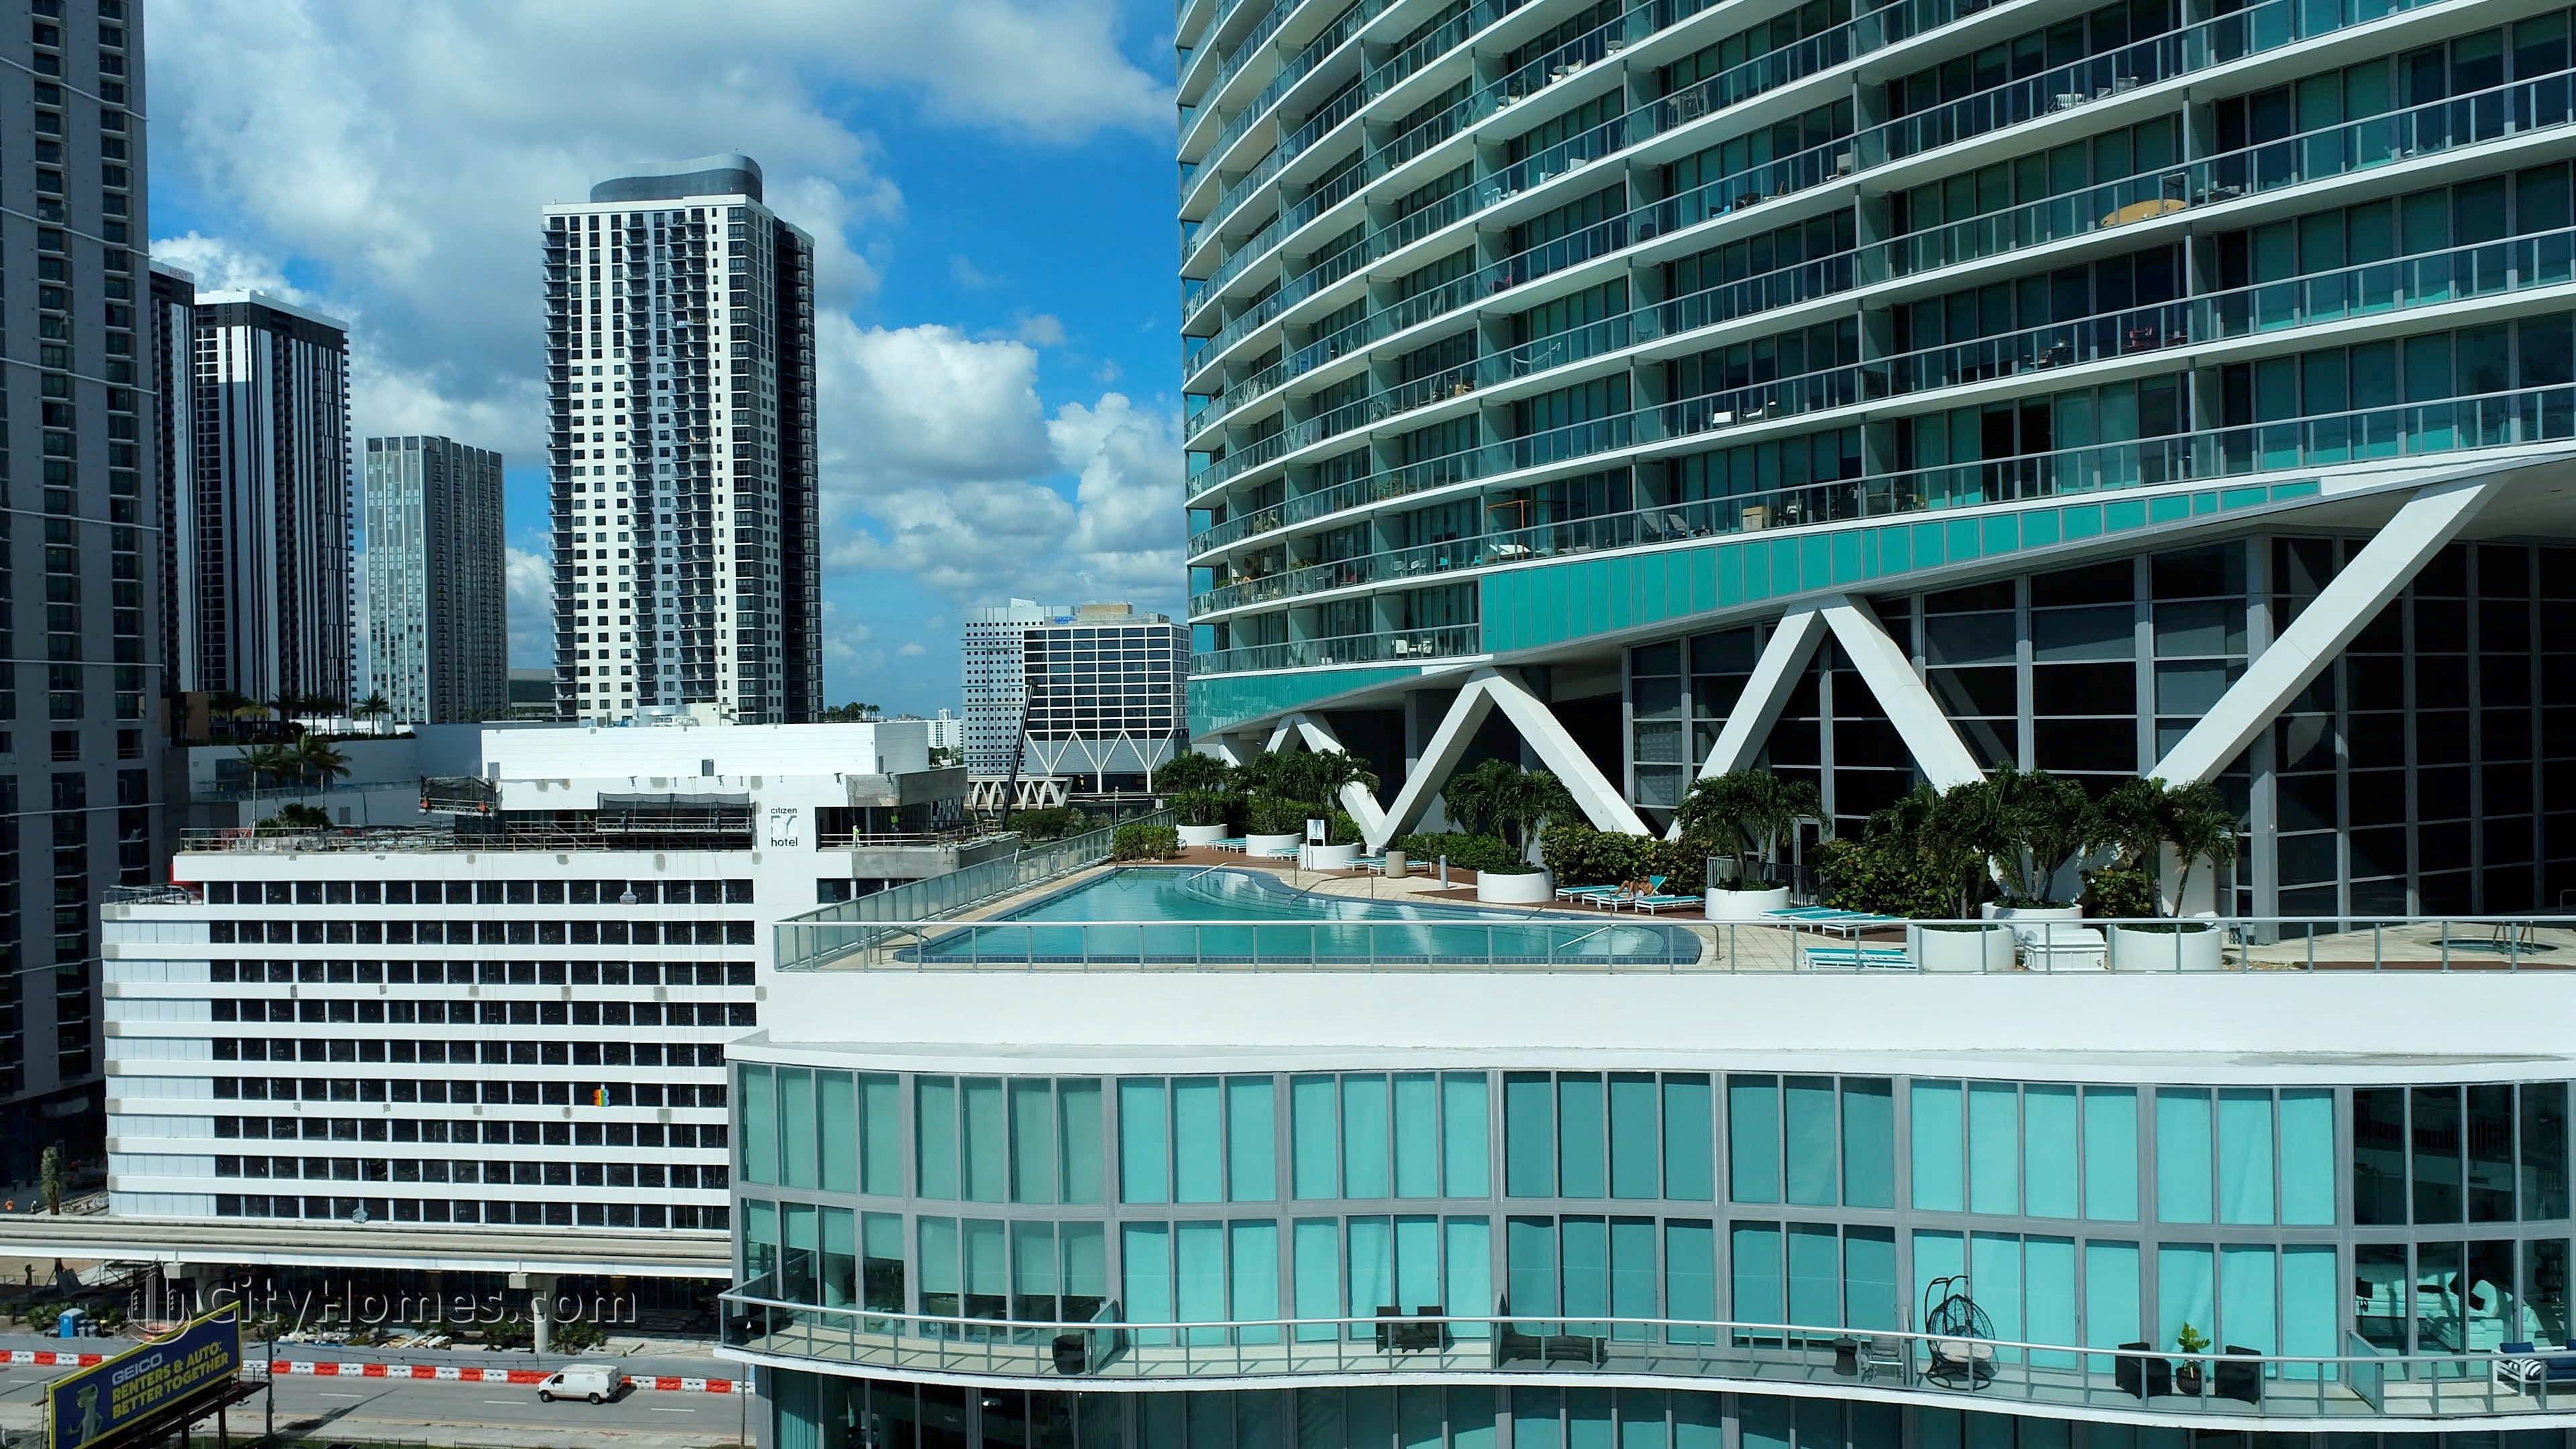 2. Marina Blue building at 888 Biscayne Blvd, Miami, FL 33132